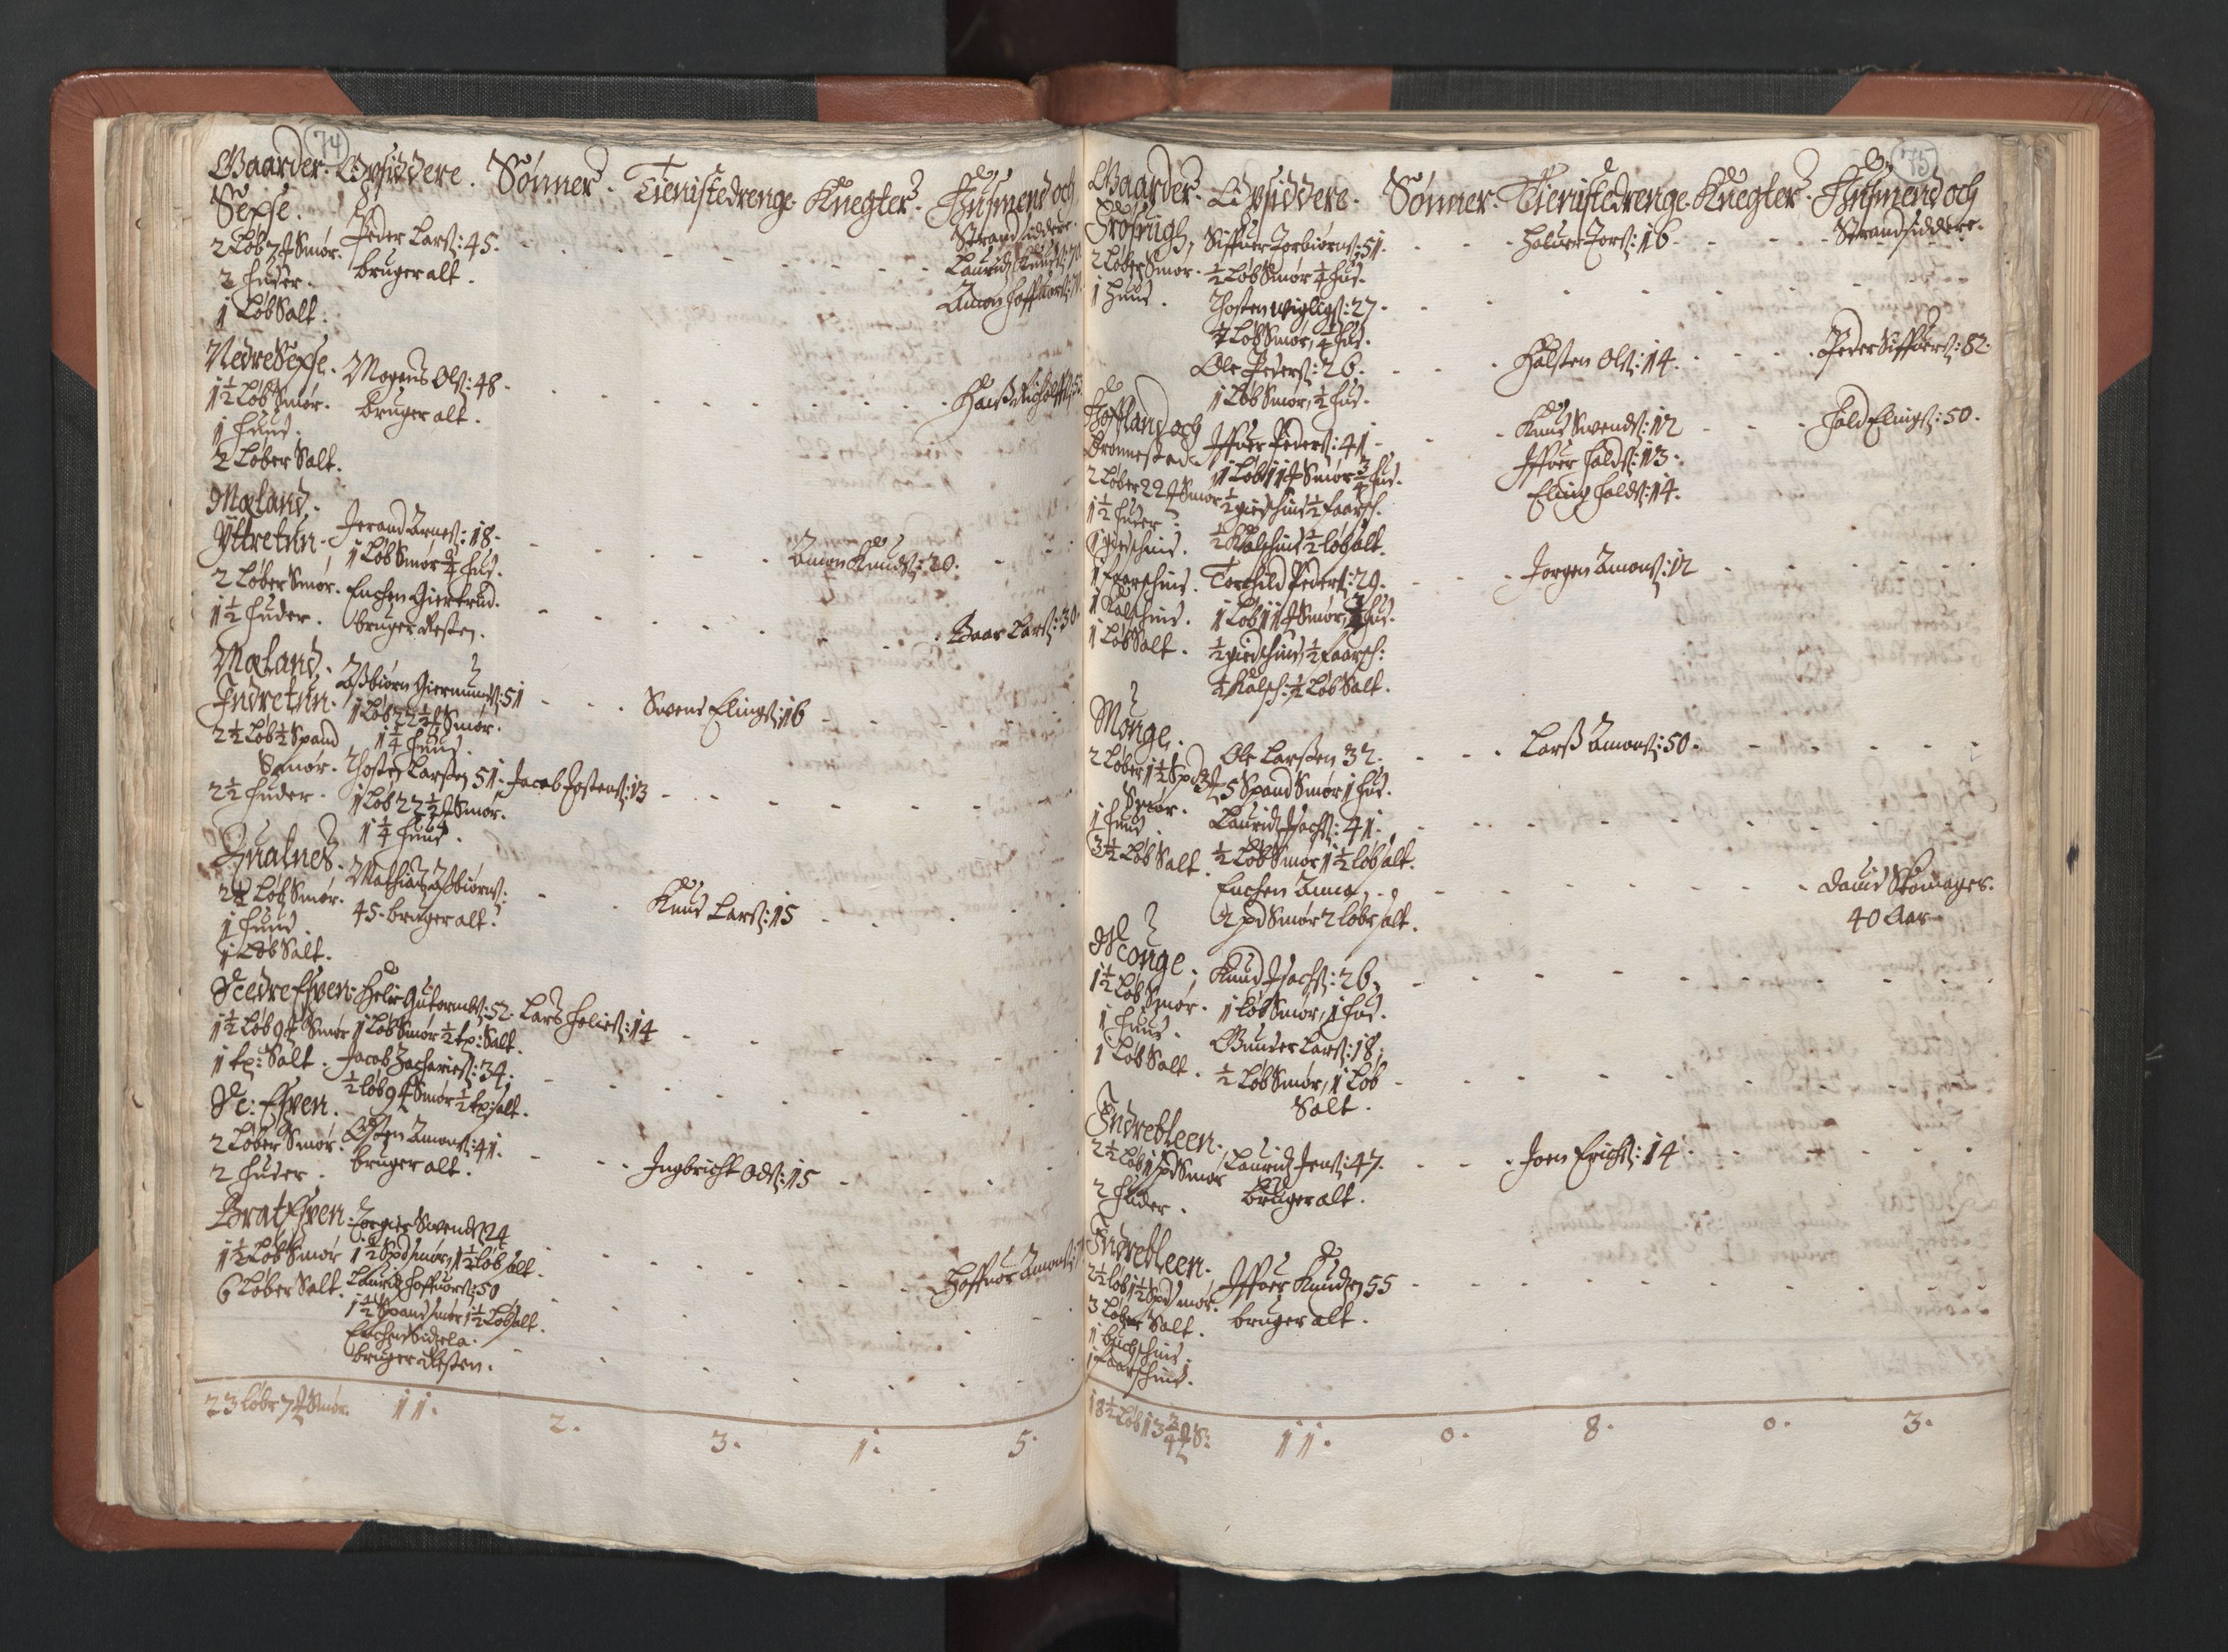 RA, Fogdenes og sorenskrivernes manntall 1664-1666, nr. 14: Hardanger len, Ytre Sogn fogderi og Indre Sogn fogderi, 1664-1665, s. 74-75